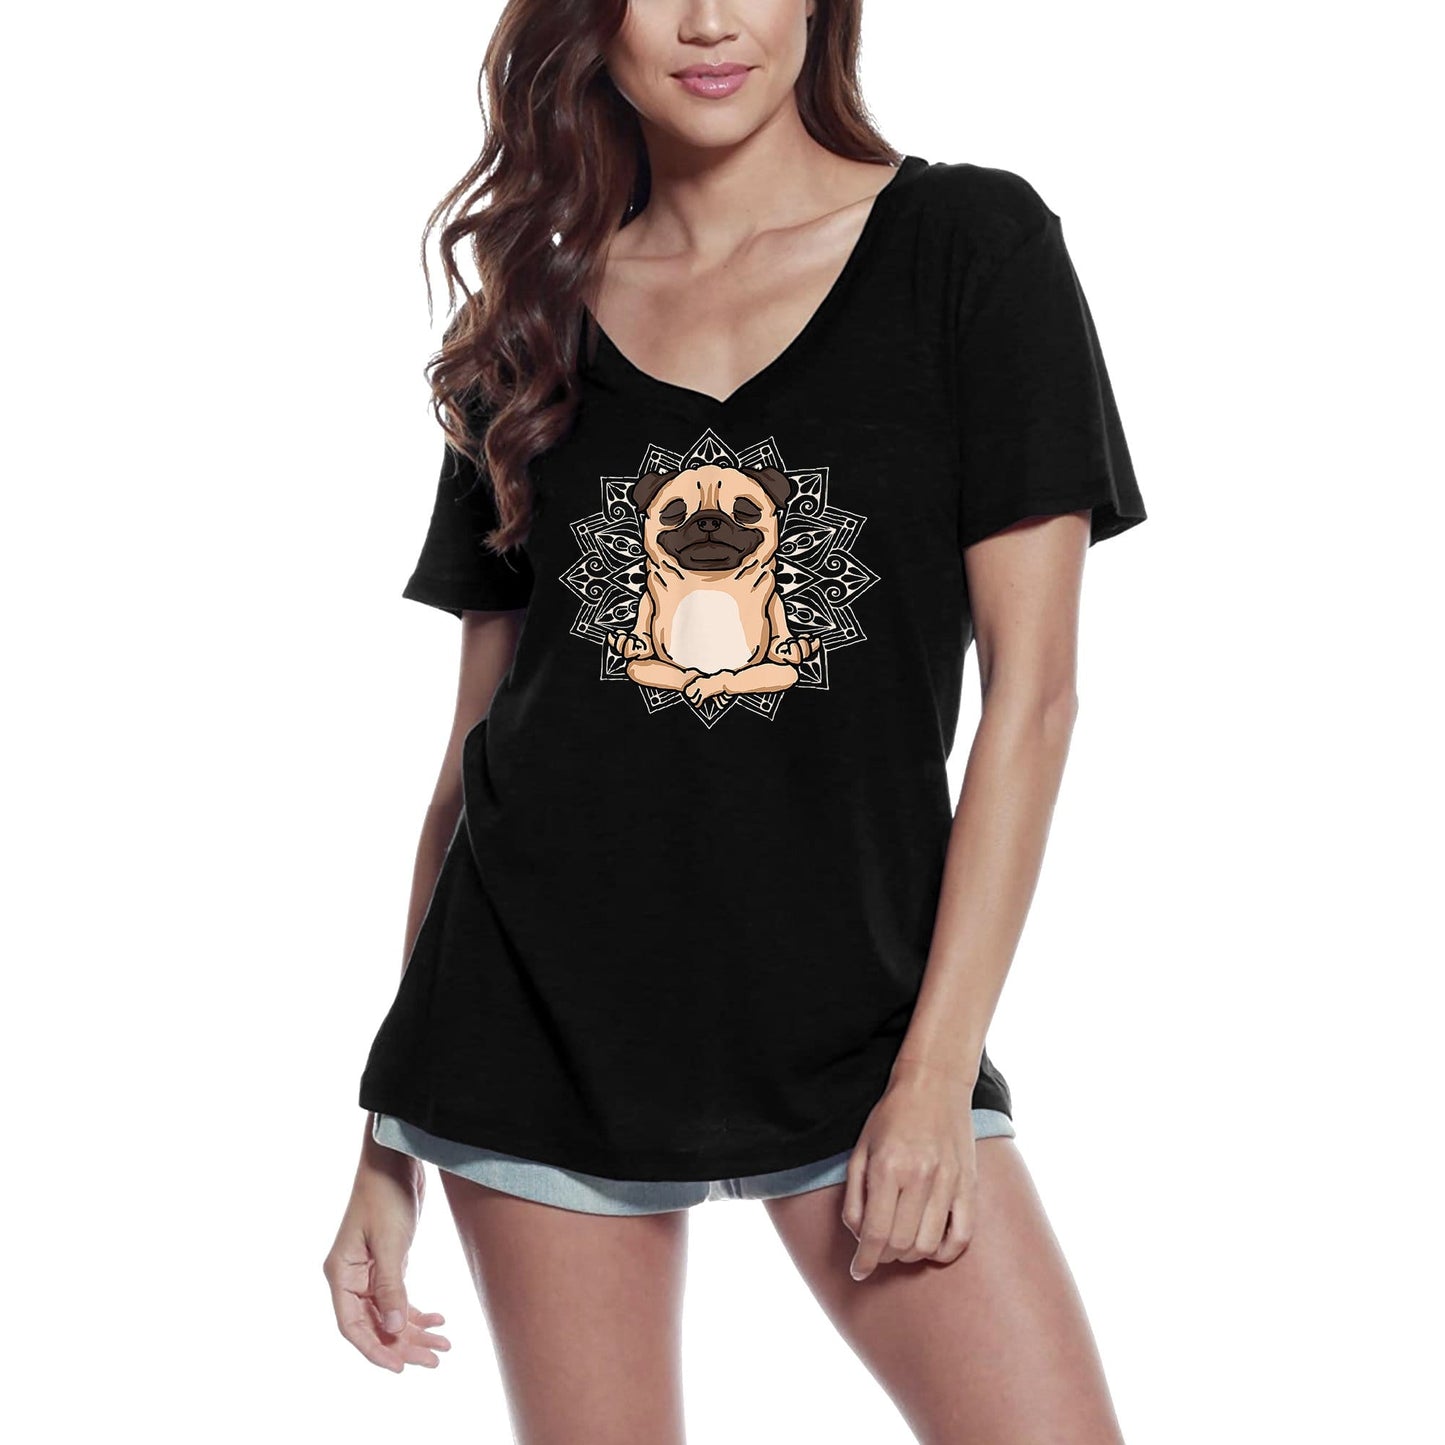 ULTRABASIC Women's V-Neck T-Shirt Yoga Pug Dog - Funny Spiritual Meditation Tee Shirt